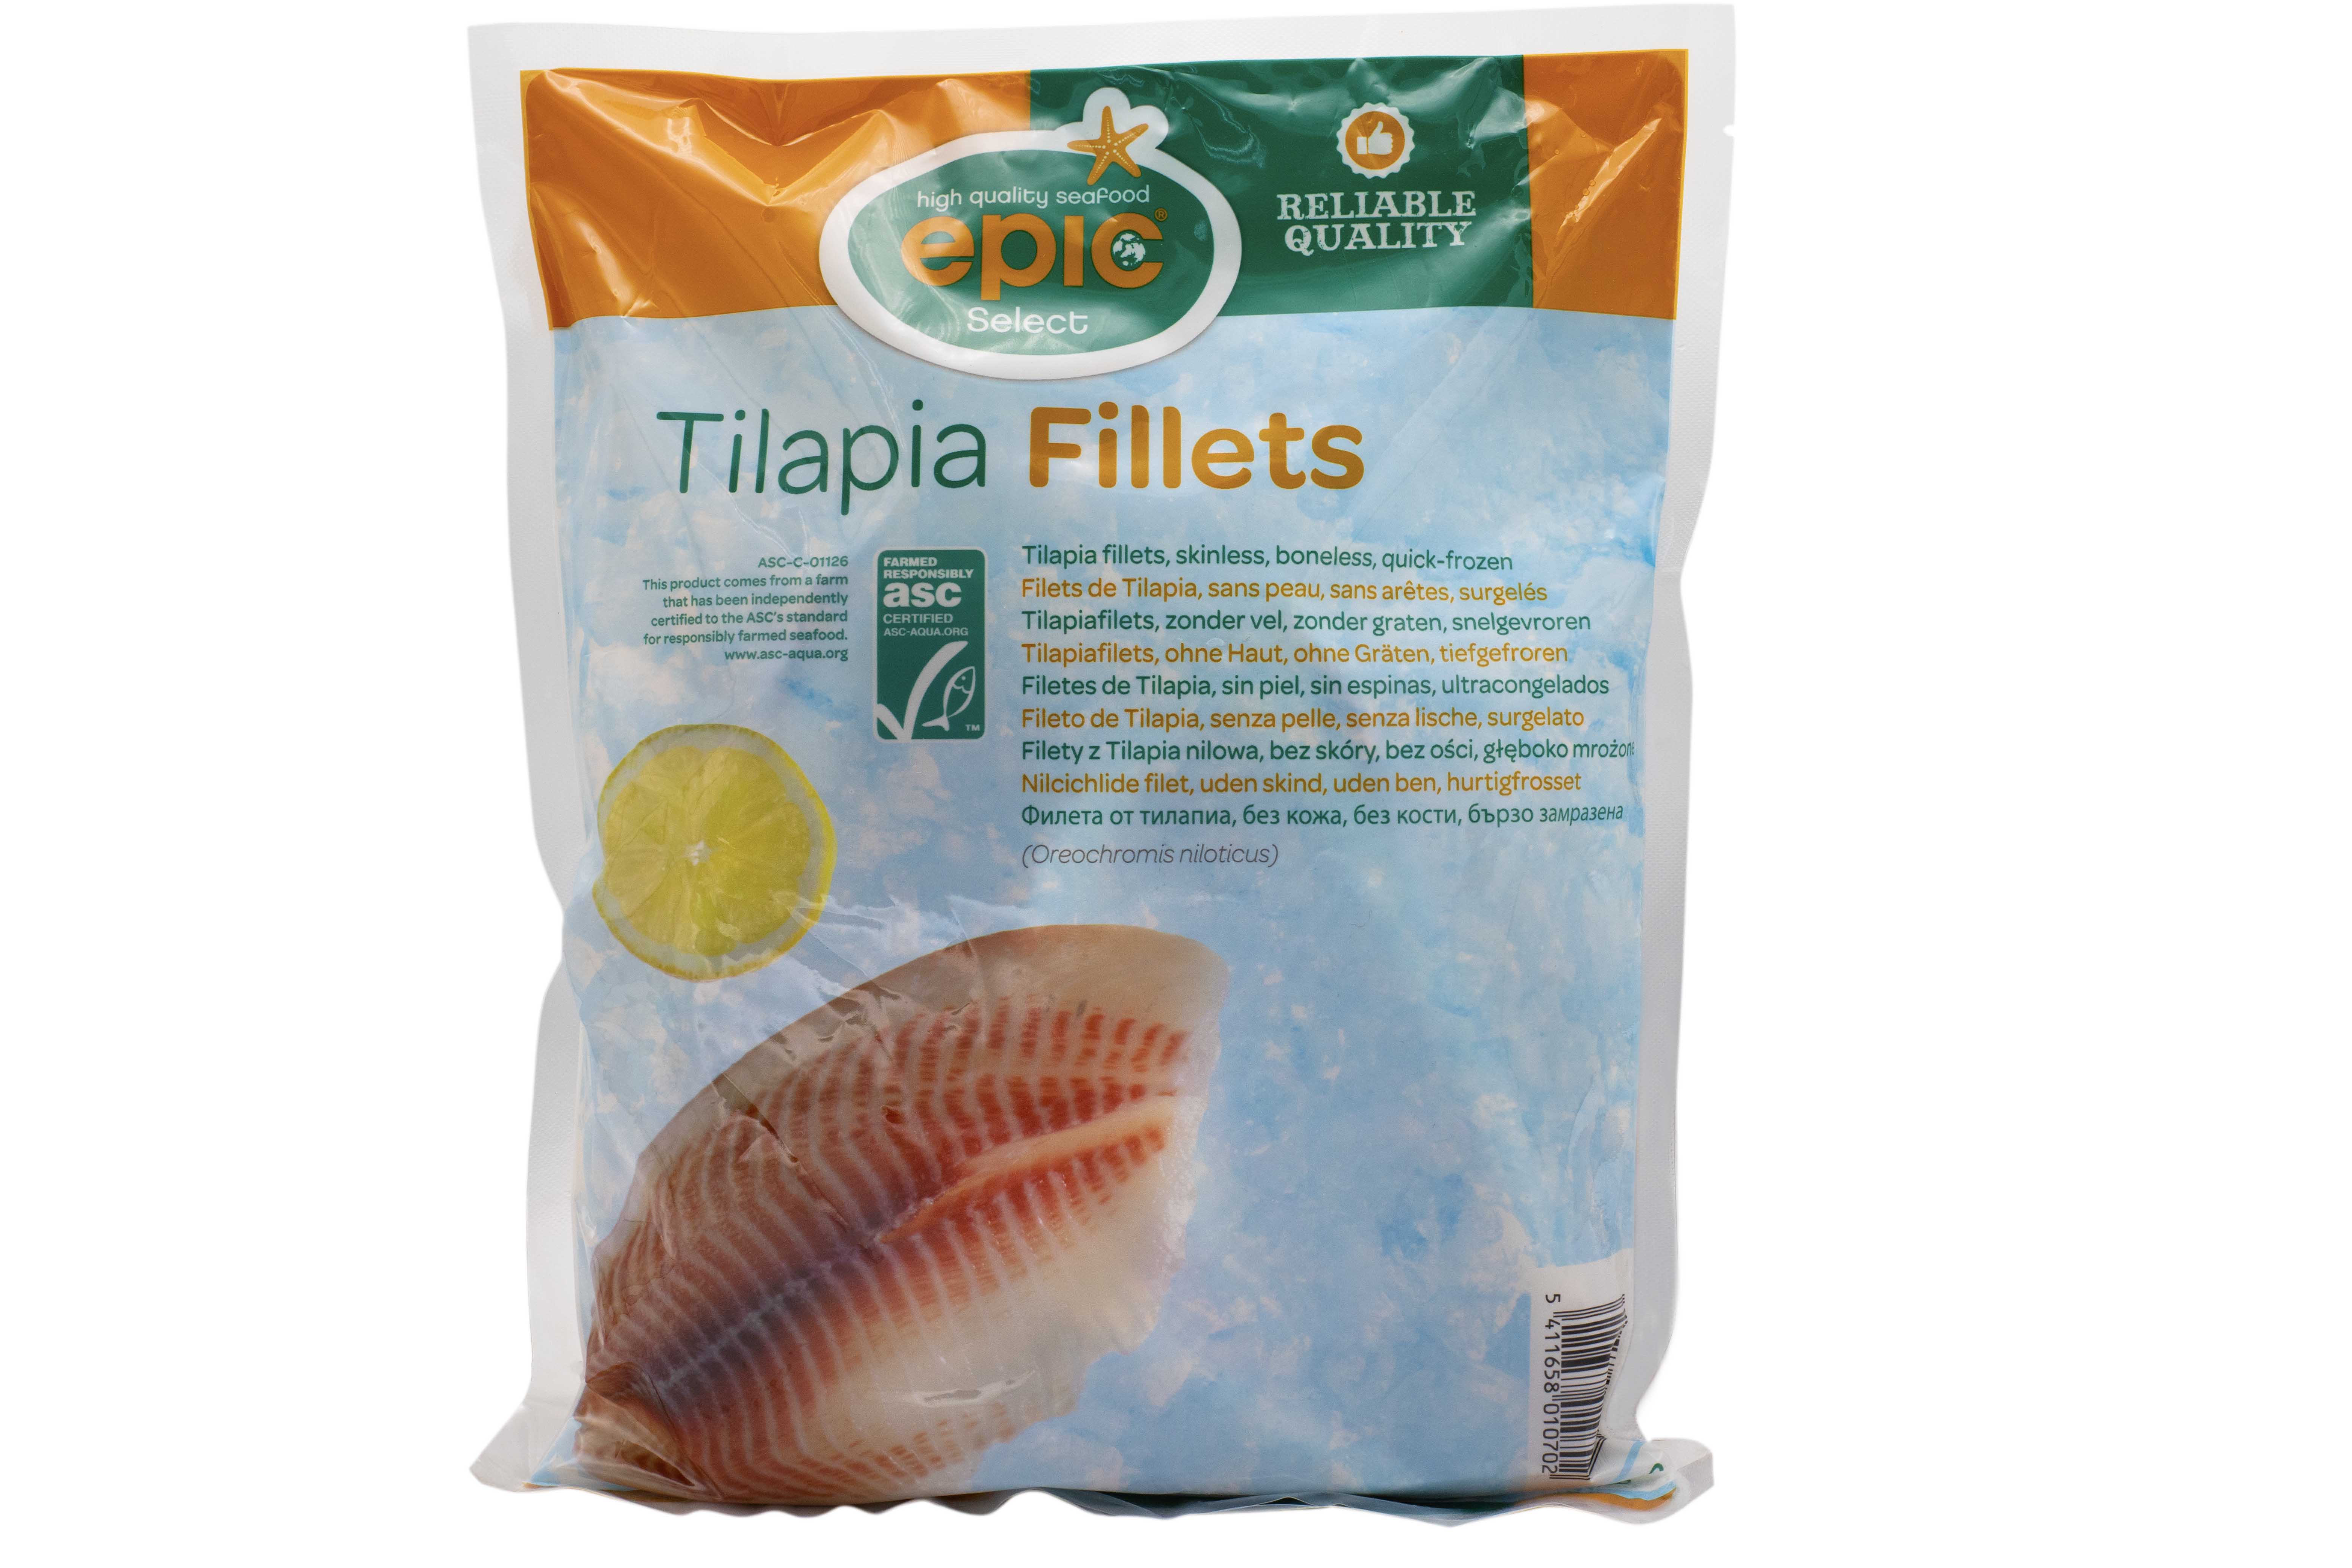 Tilapia file 140 - 200 gr fara piele, punga 800g net, Epic Select